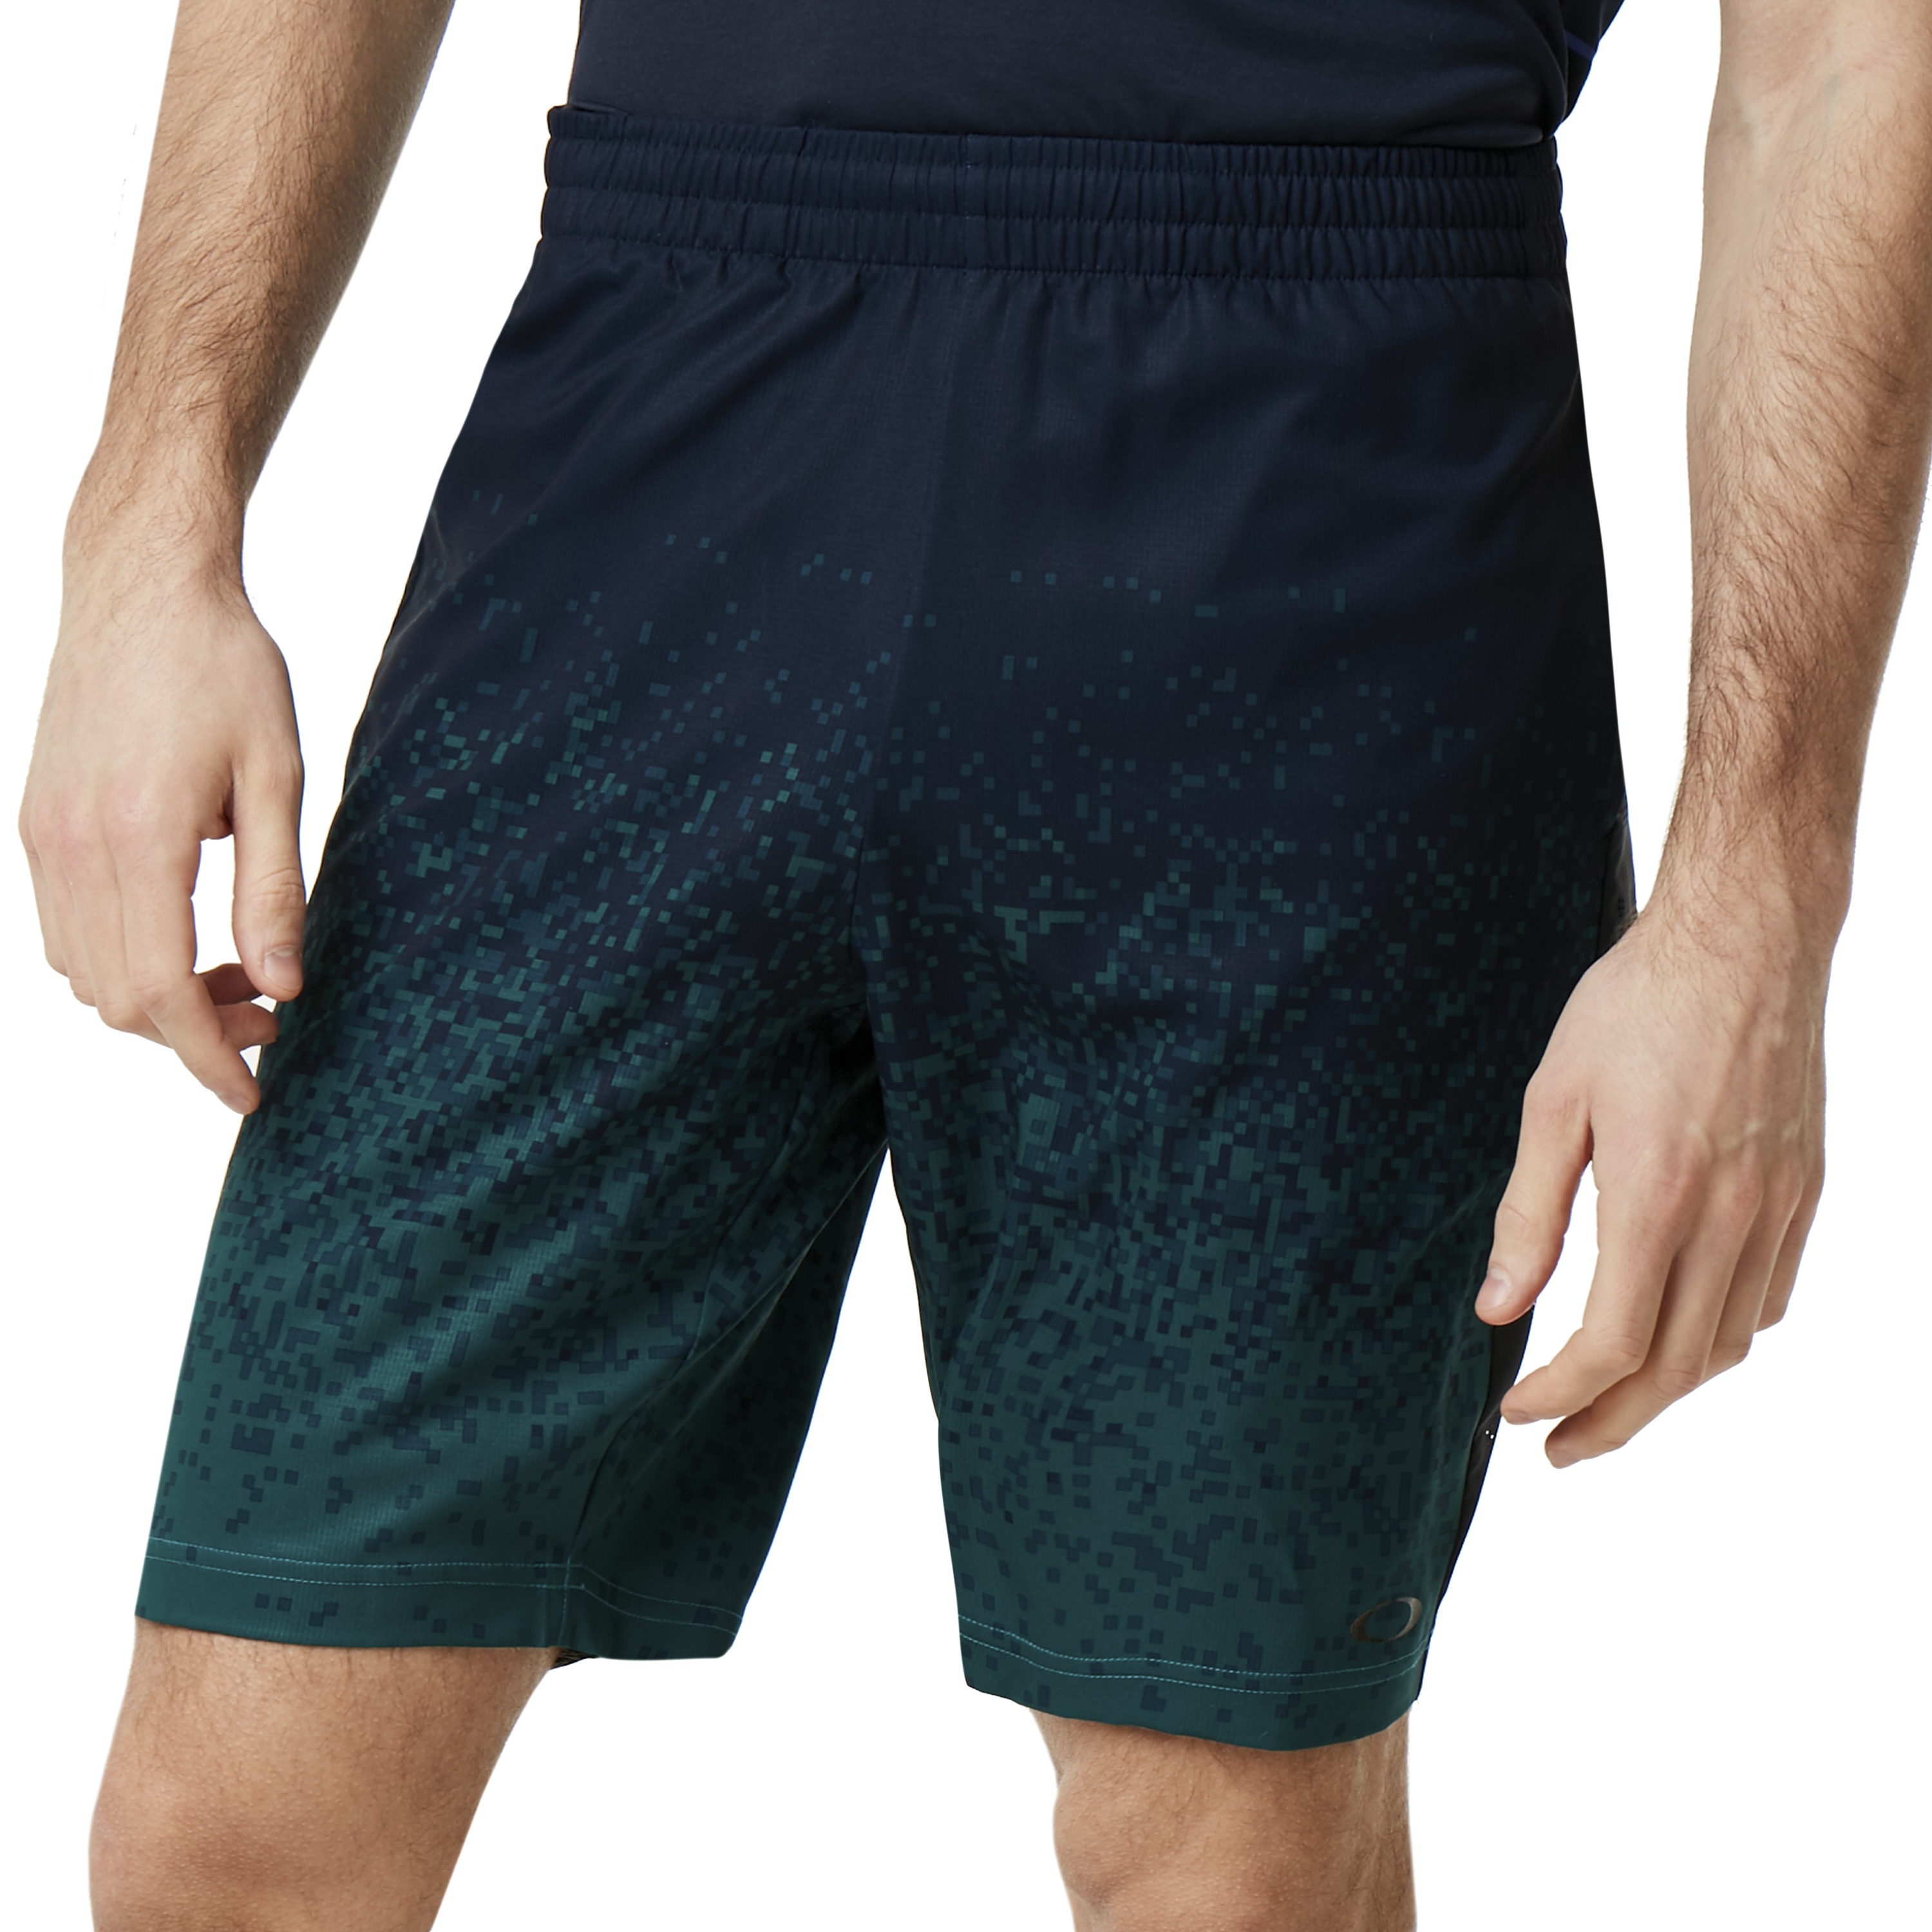 oakley training shorts